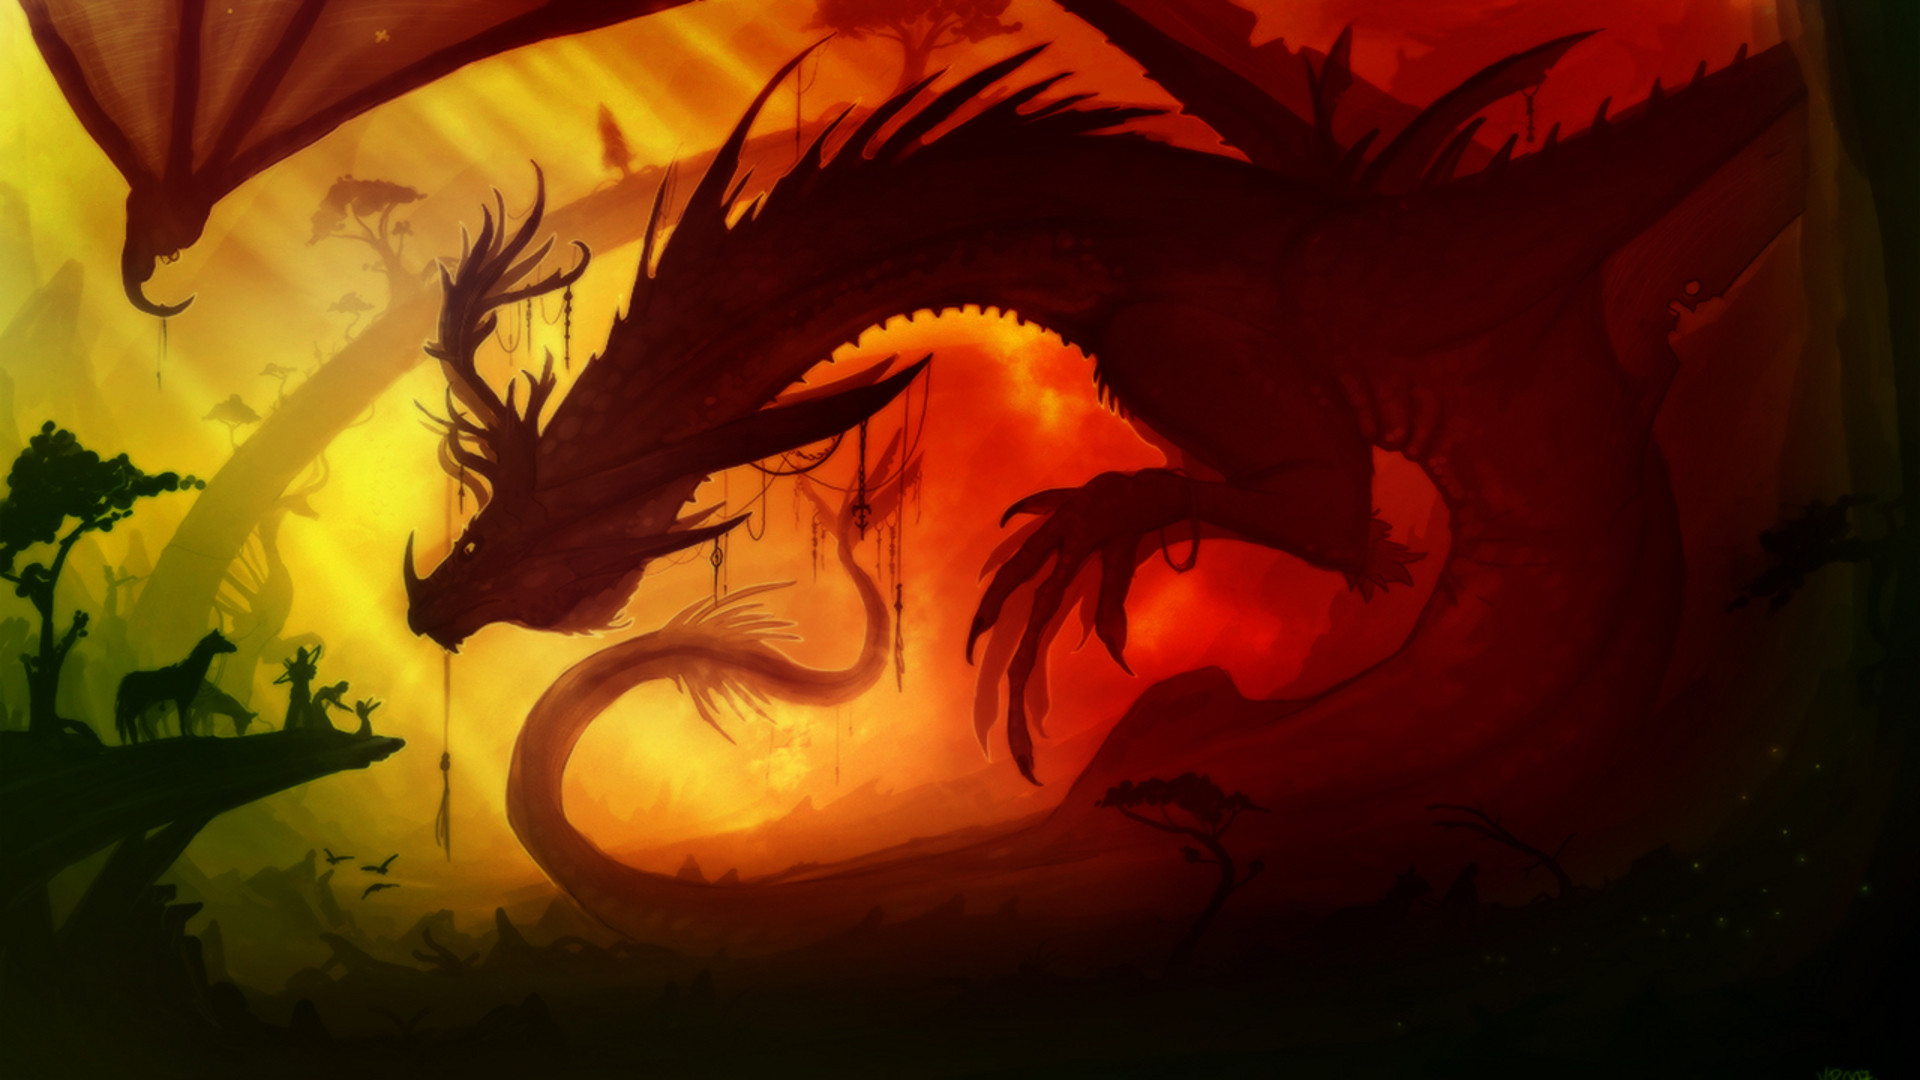 1920x1080 Fantasy dragons